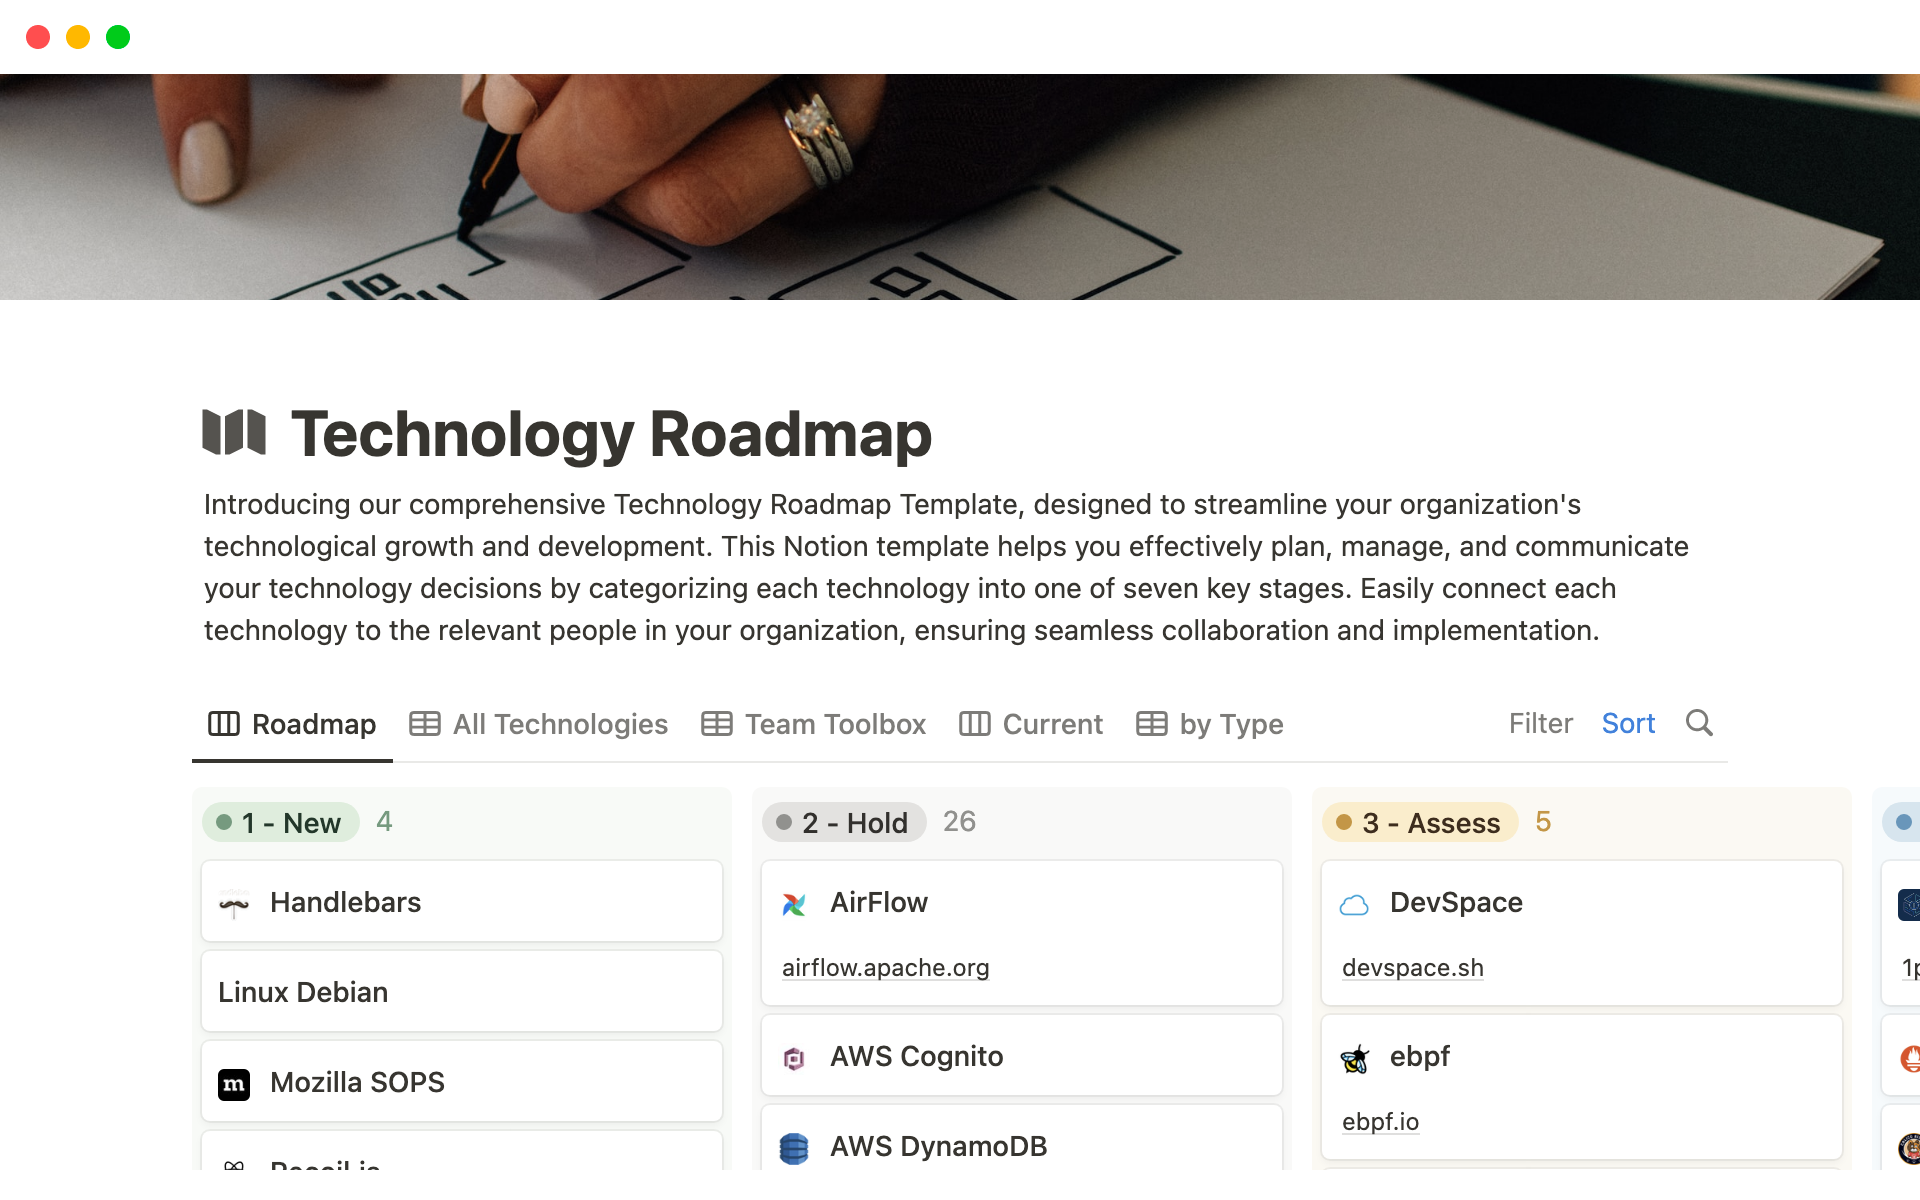 Managing your organization's technology roadmap.